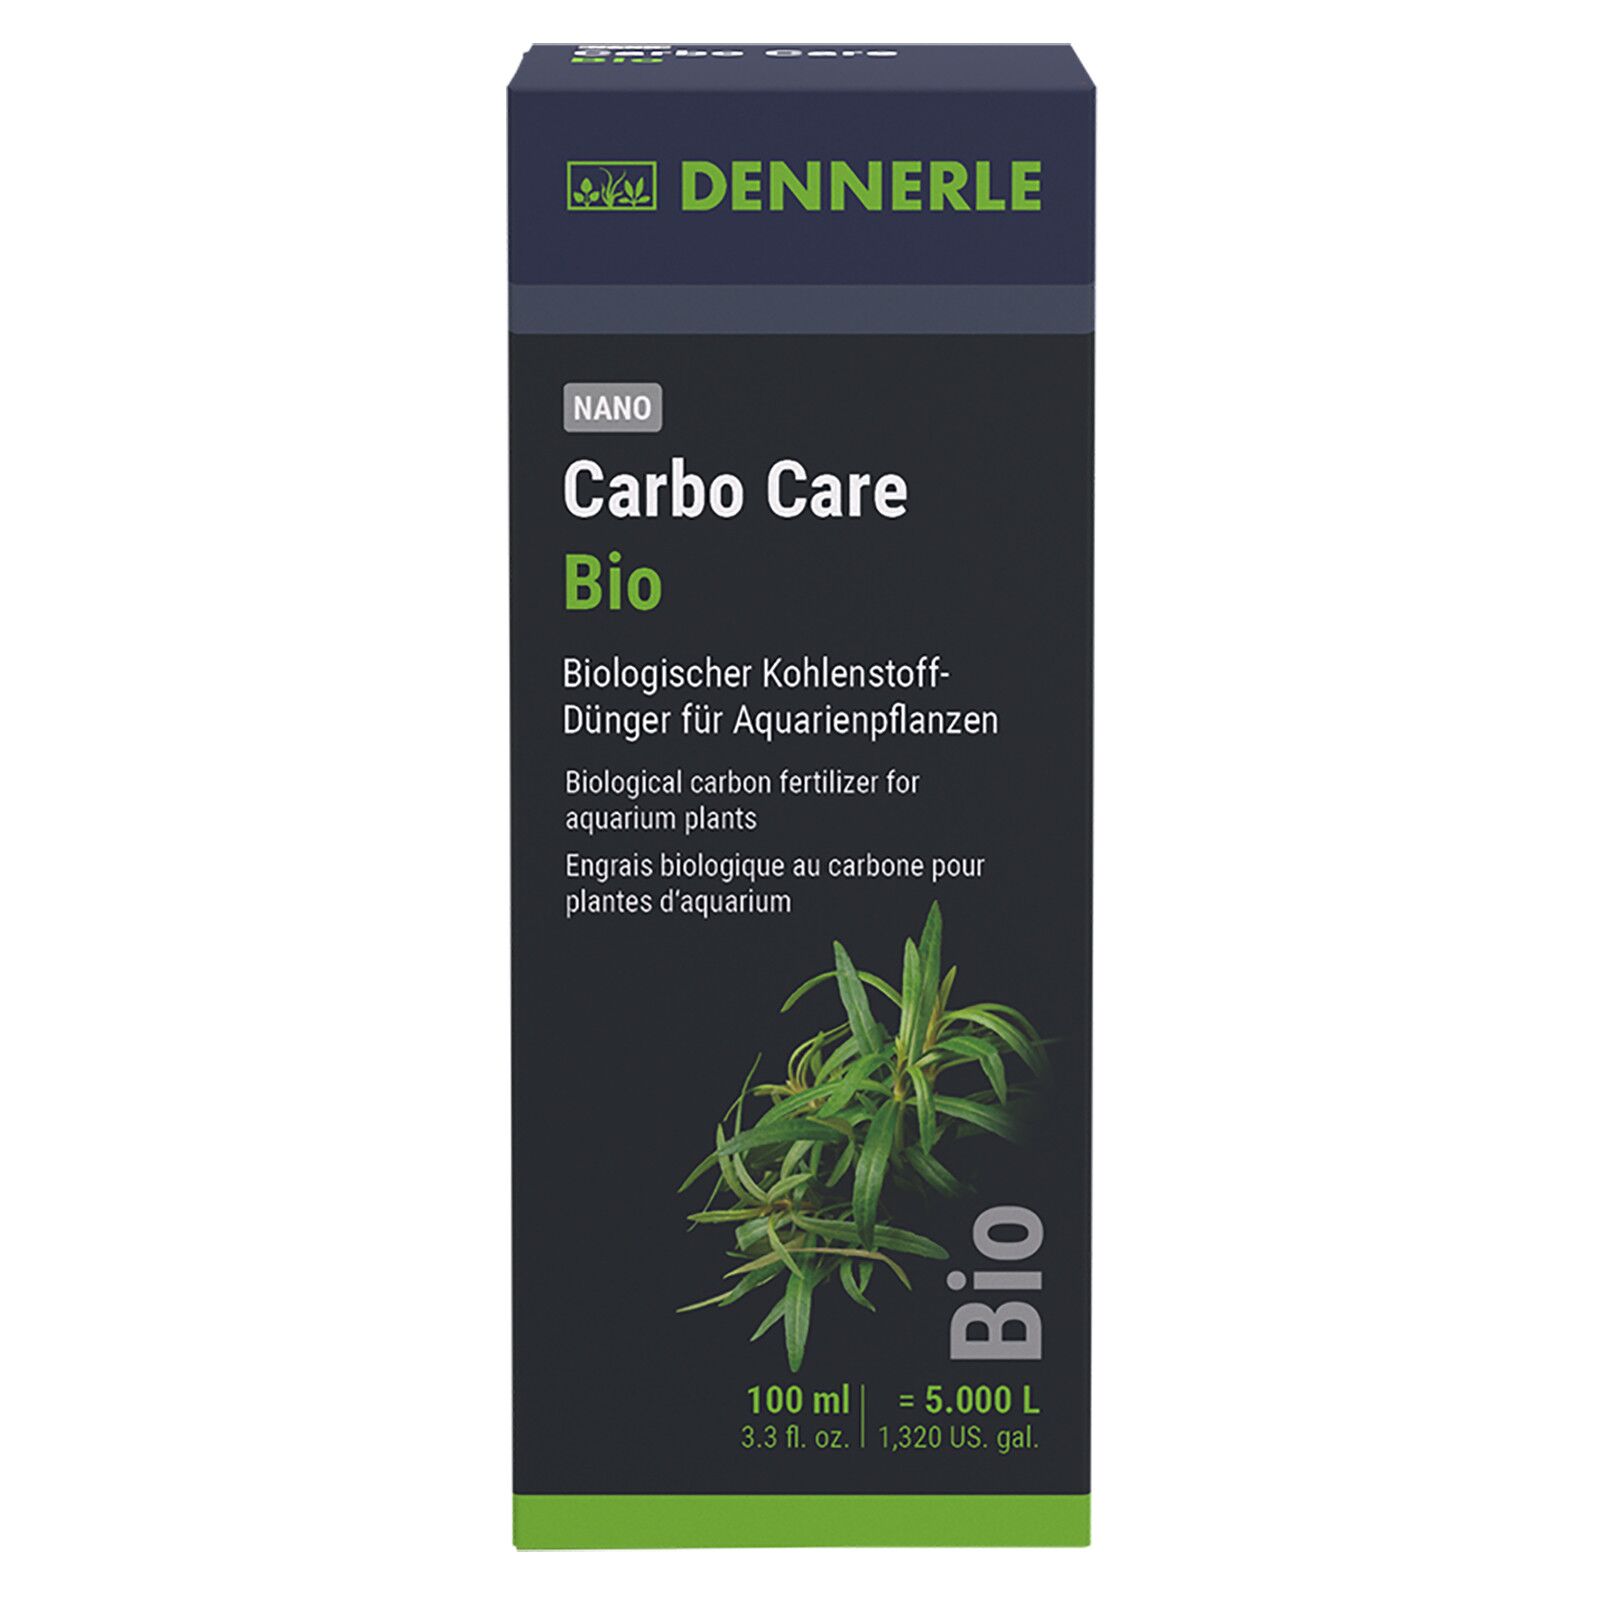 Dennerle - Carbo Care Bio